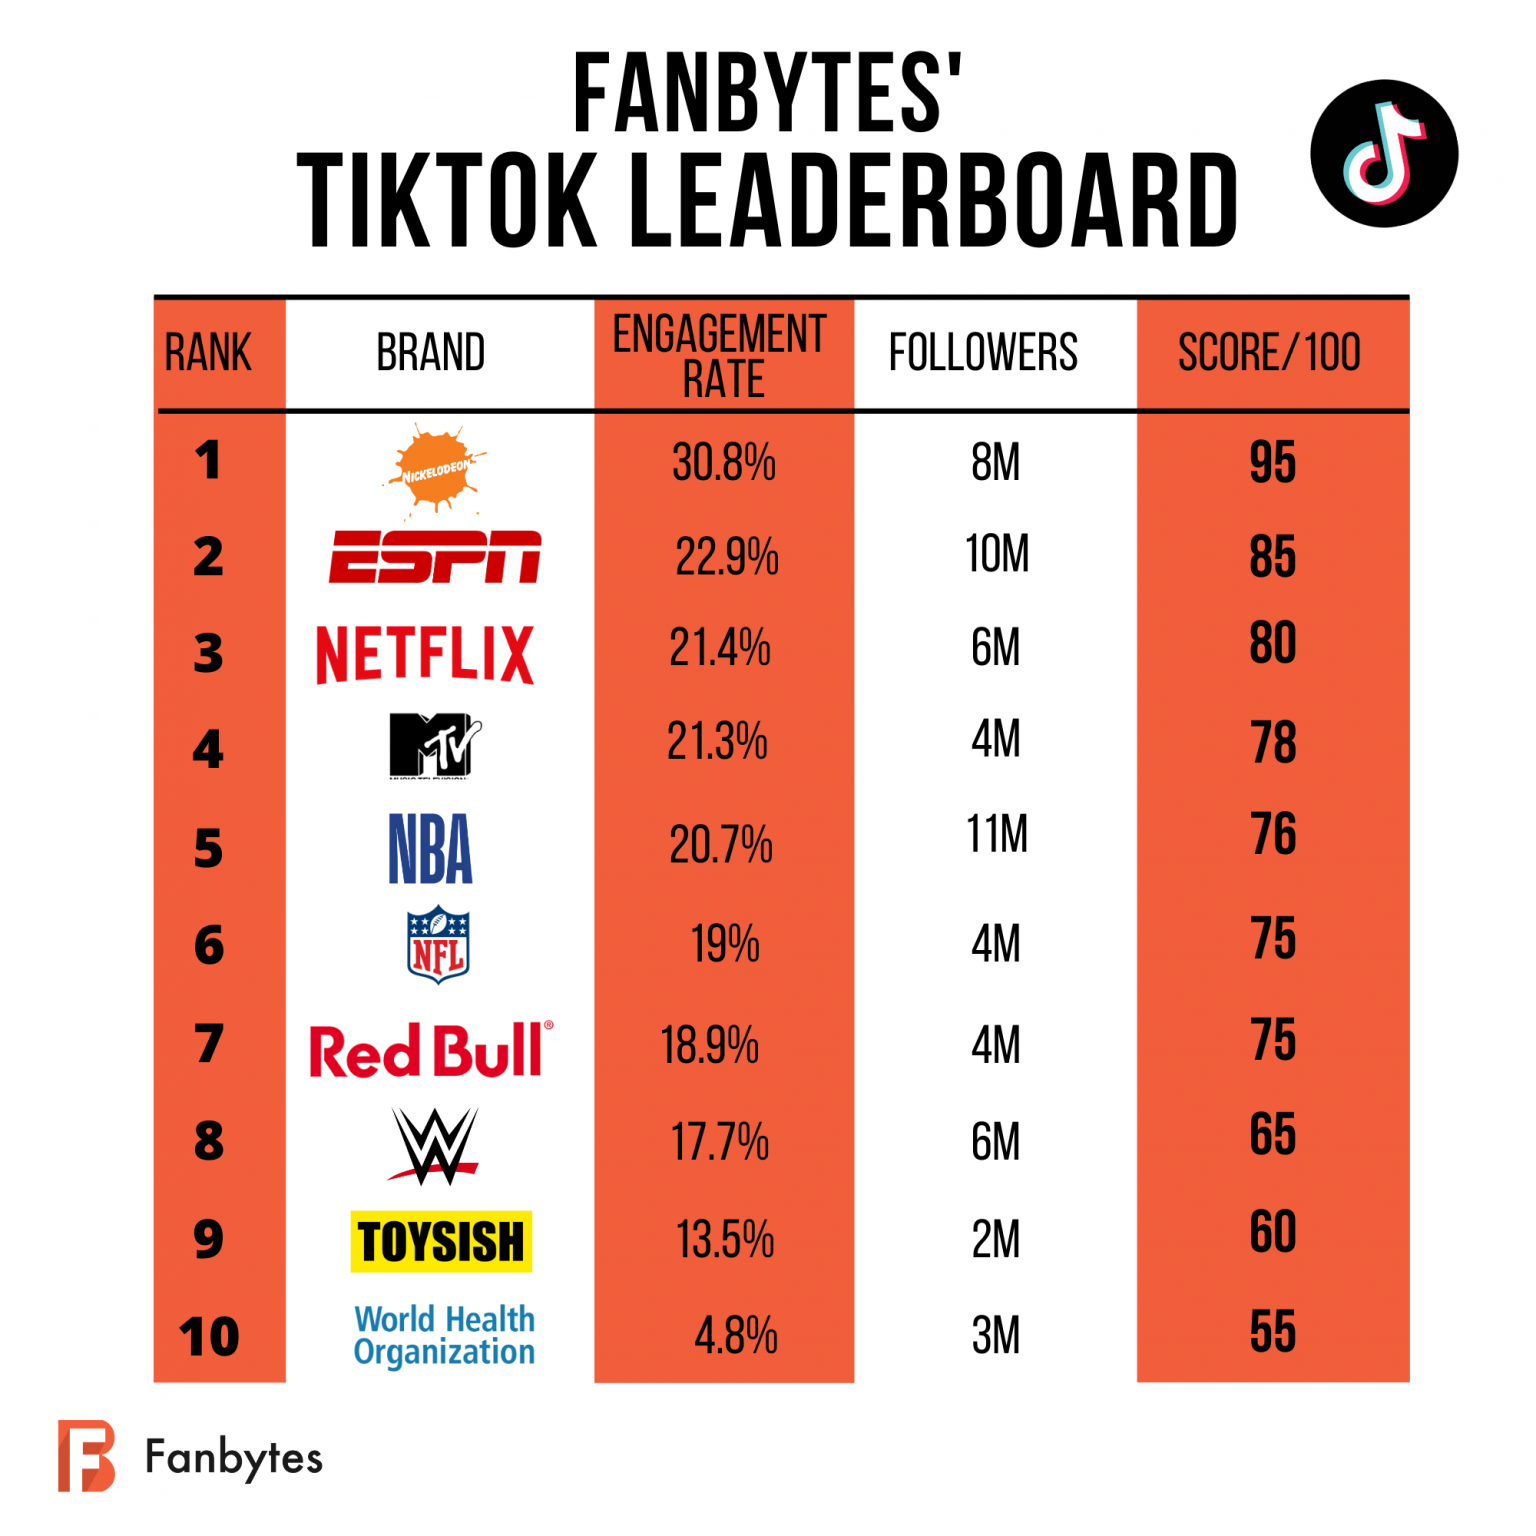 Ultimate TikTok Brand Leaderboard The Top 10 Best Brands On TikTok